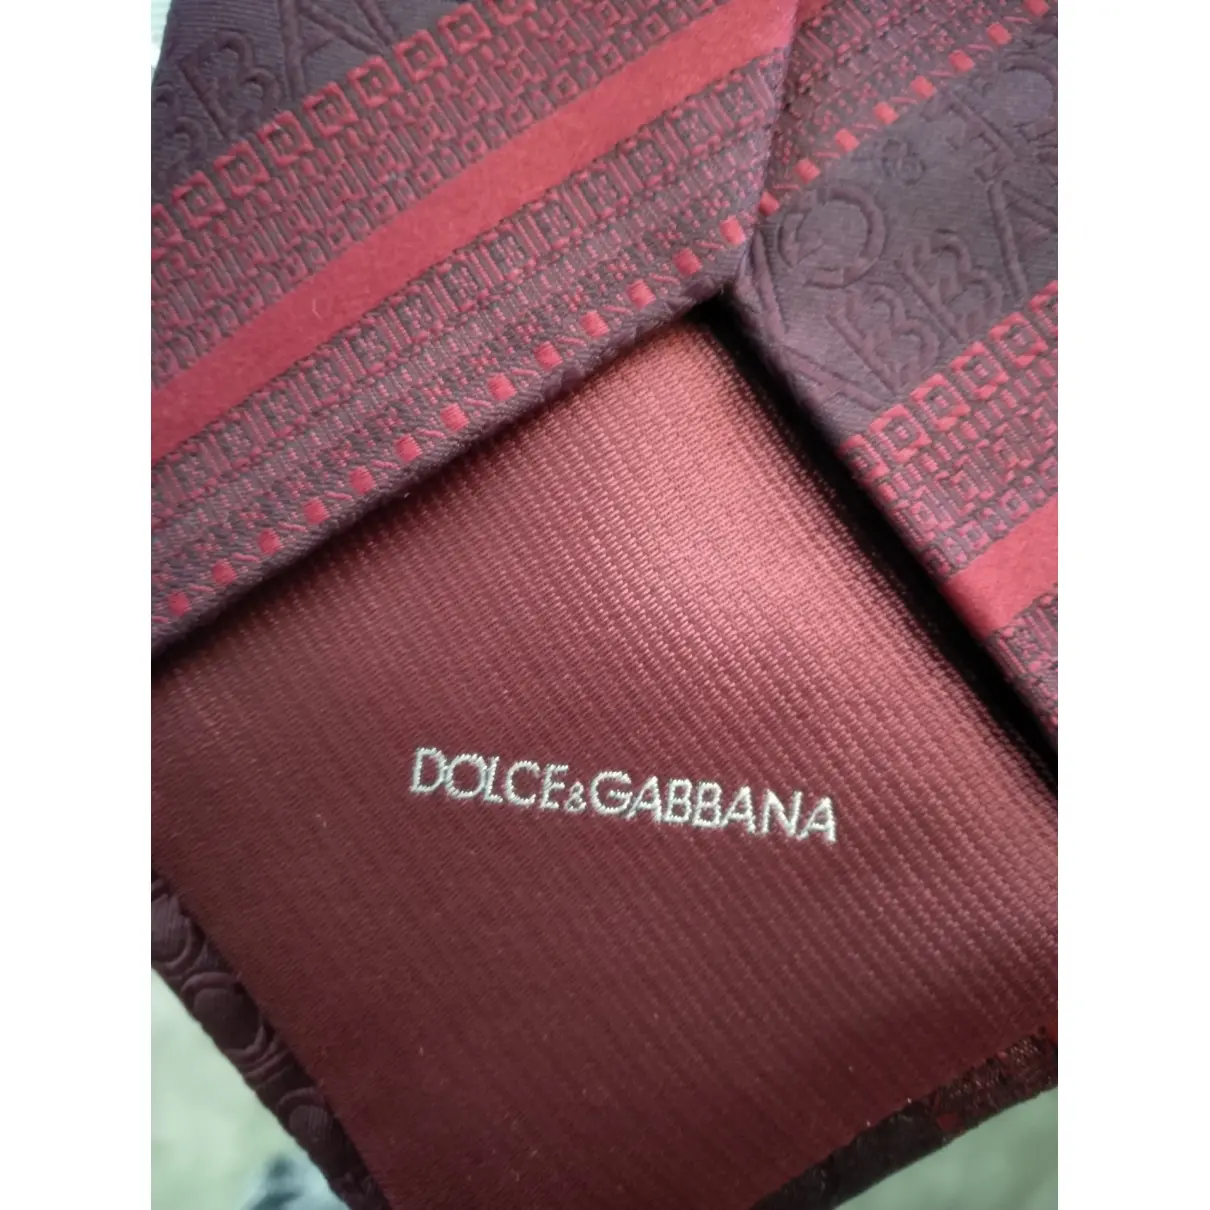 Dolce & Gabbana Silk tie for sale